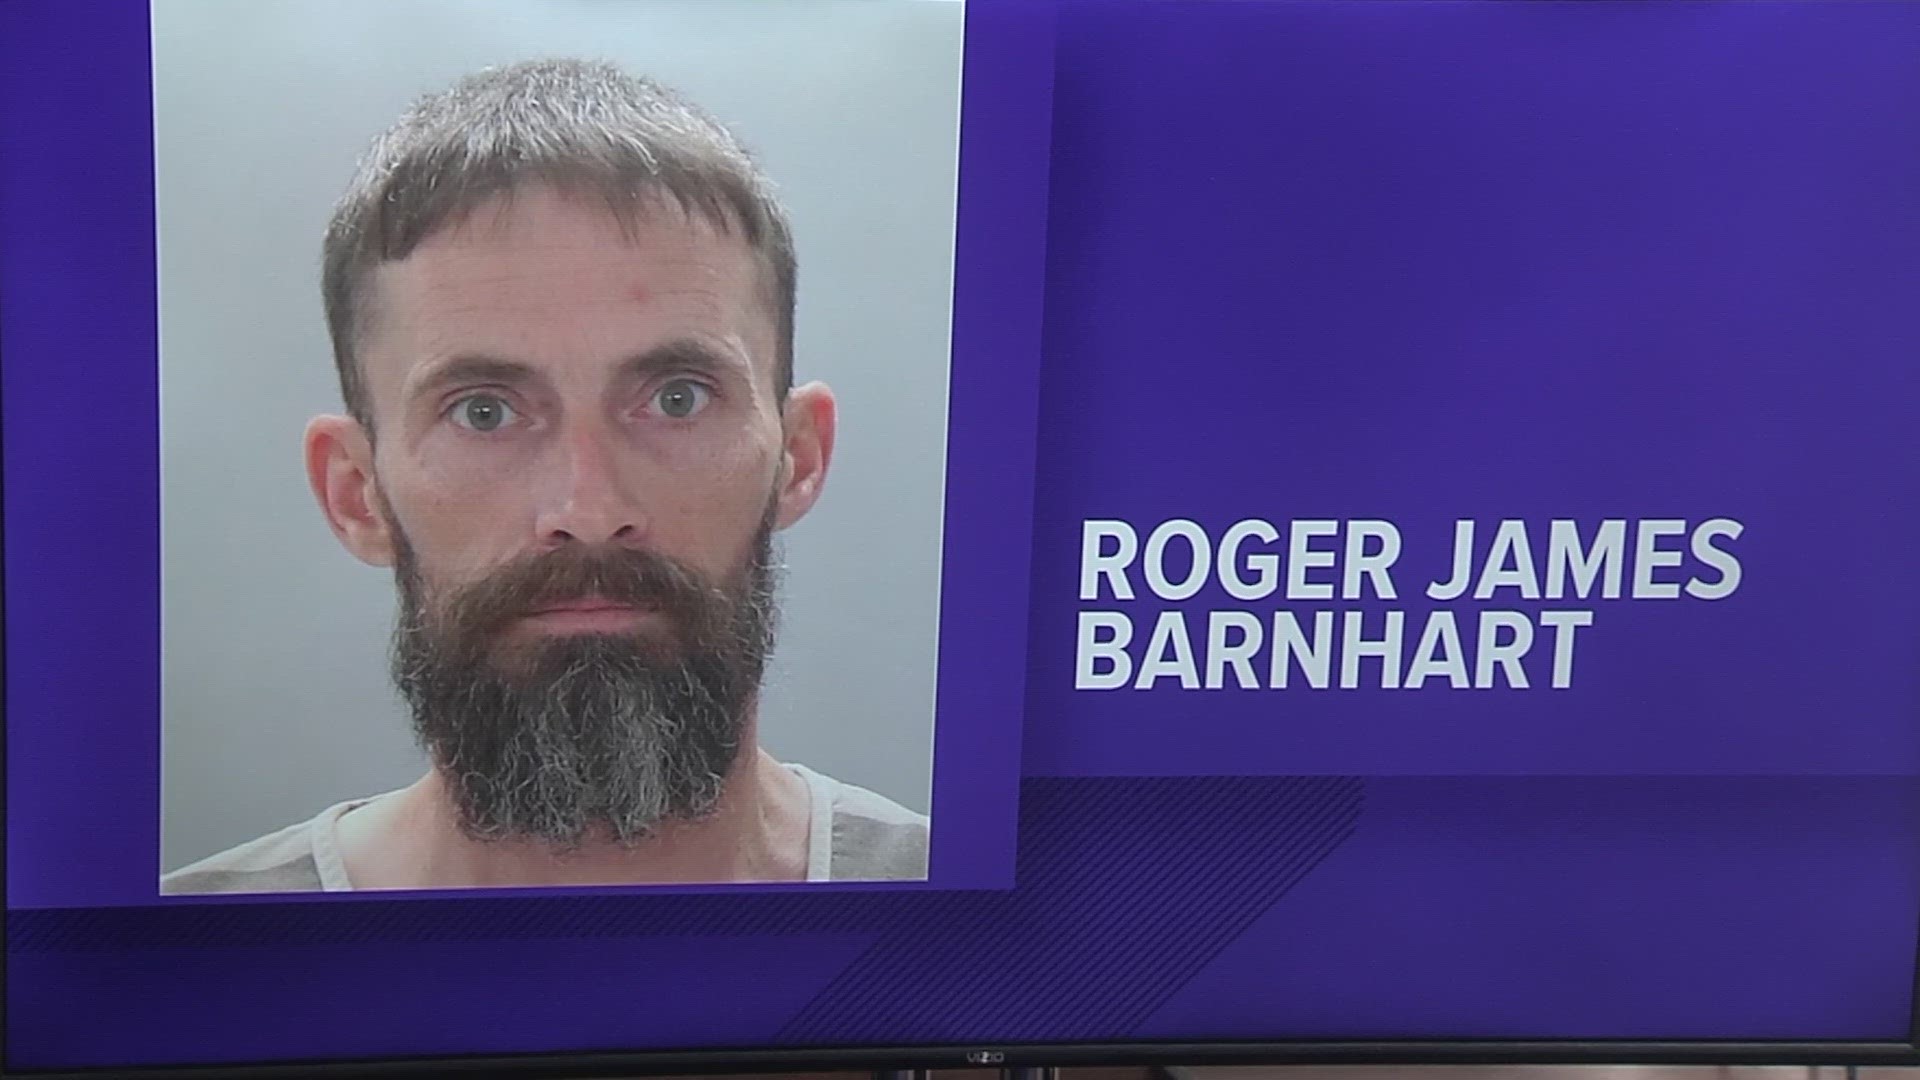 Prosecutors said Roger James Barnhart's employment as an EMT factored into his sentence.